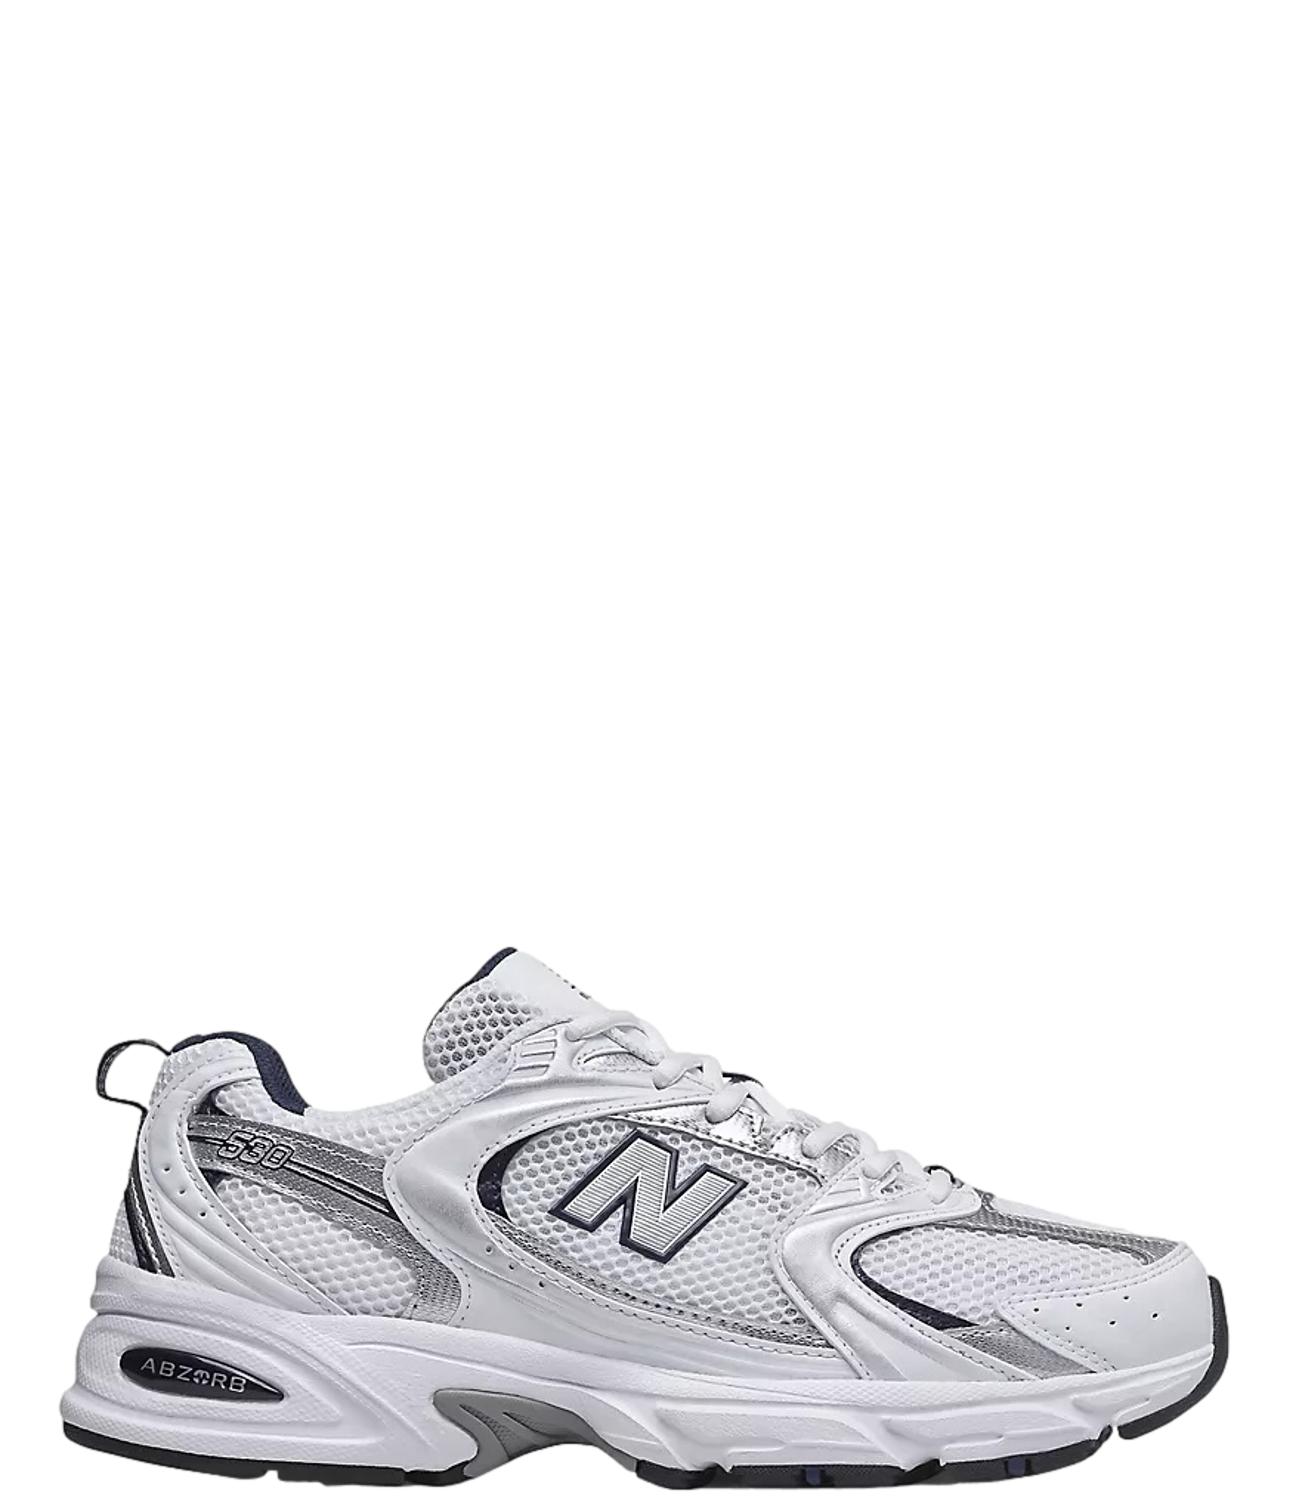 New Balance 530 bianca grigio argento